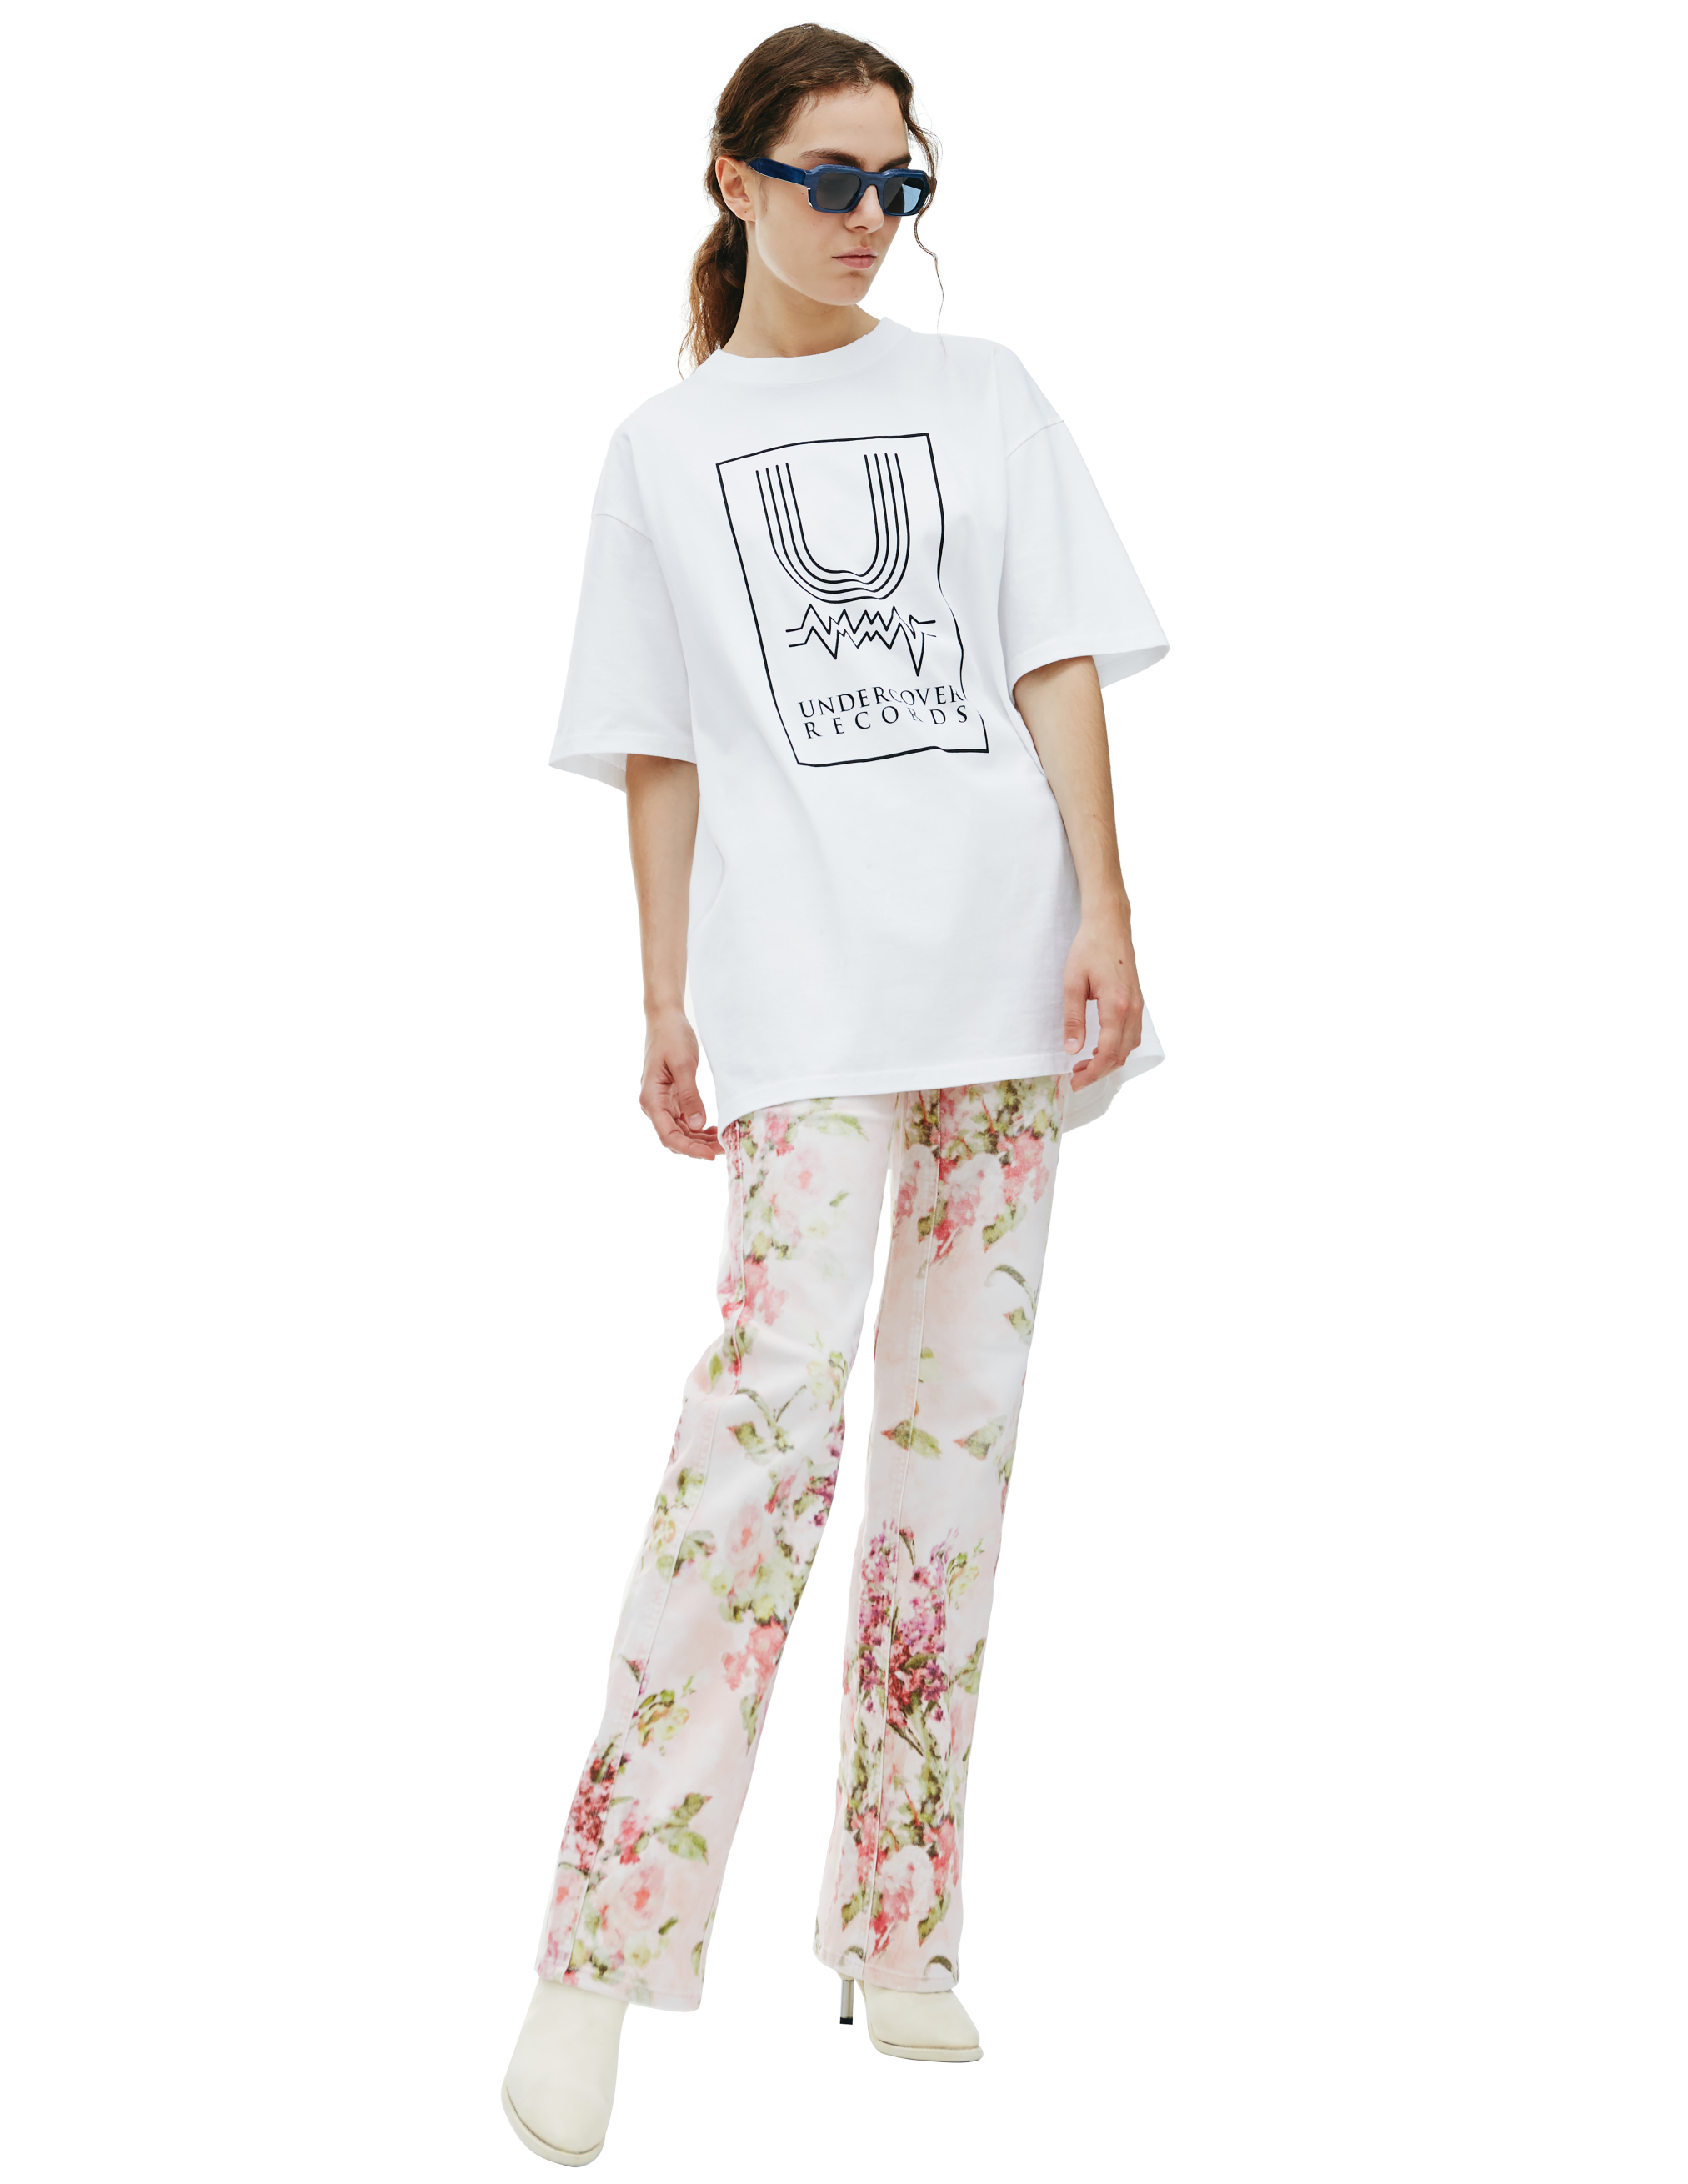 Белая футболка Undercover Records Undercover UC2B9805/3/WHITE, размер 4;3